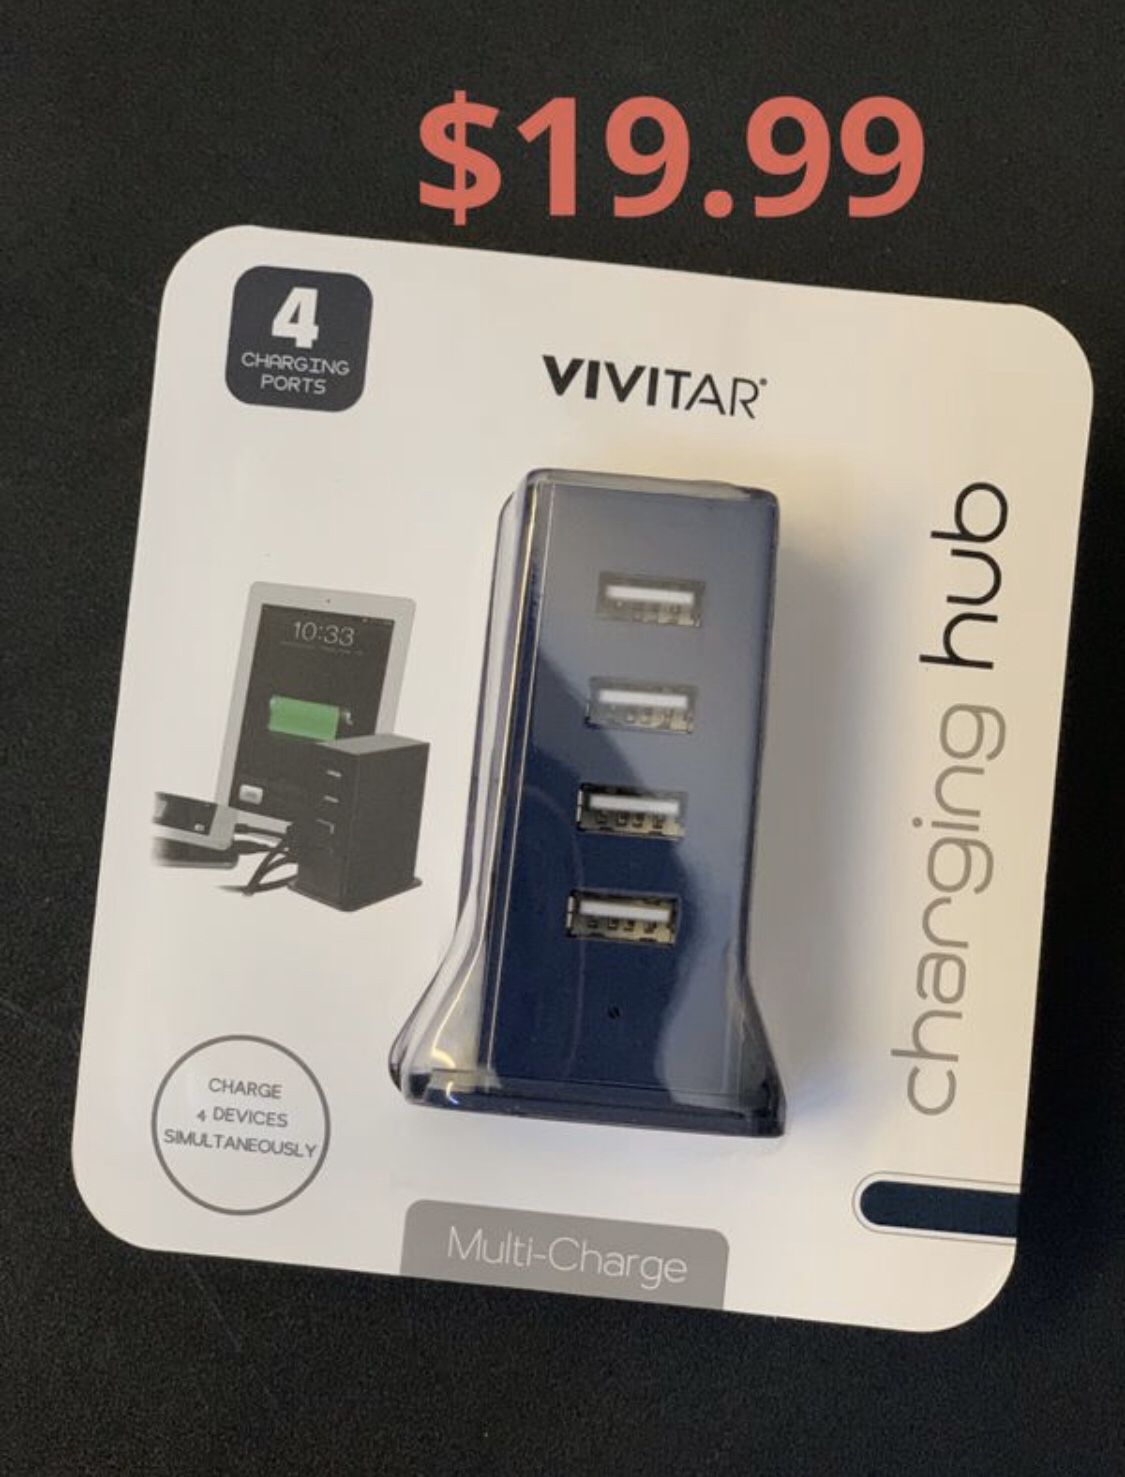 Vivitar 4 port desktop USB charging hub